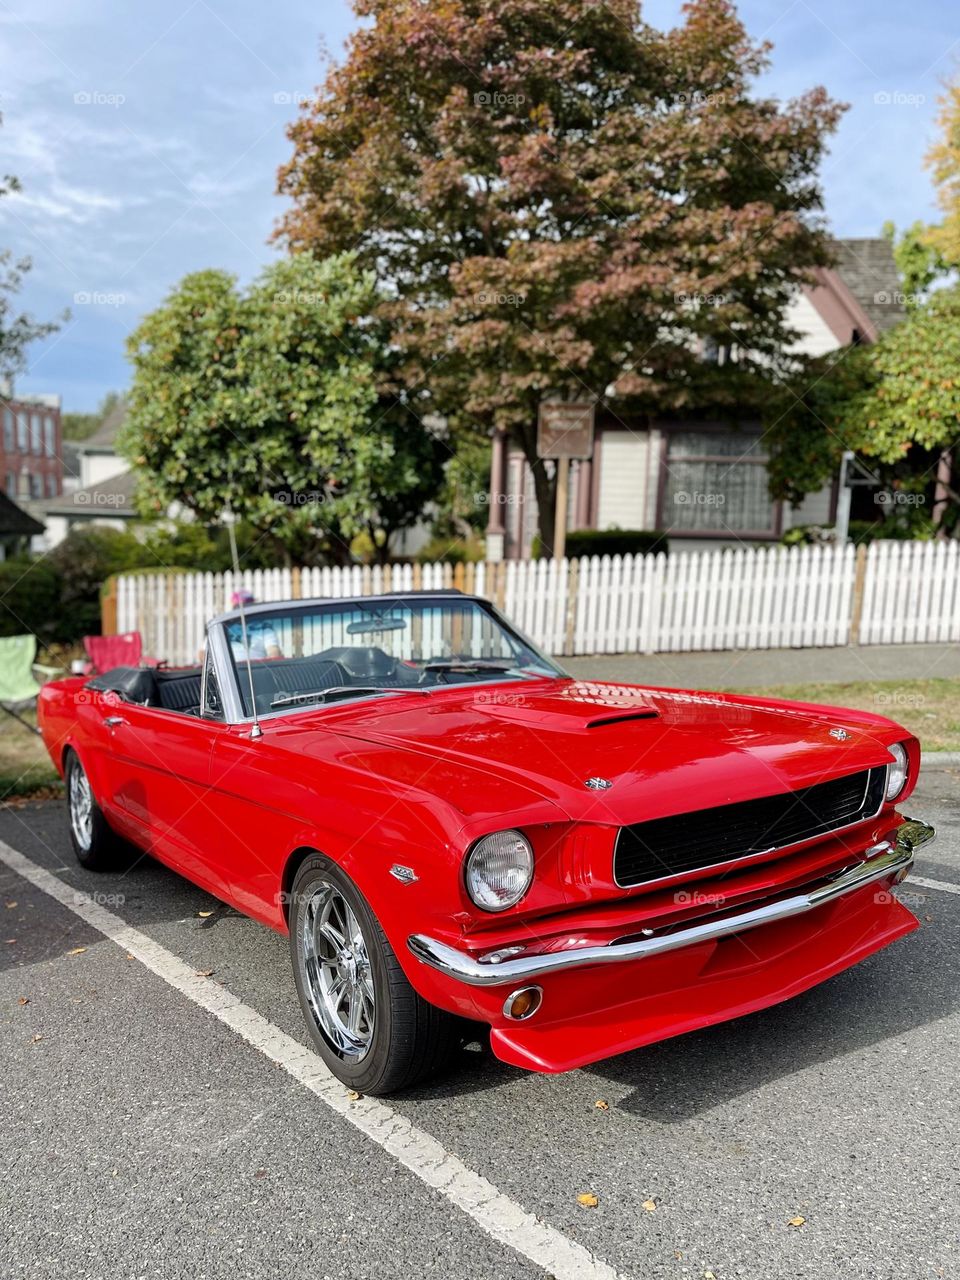 Red retro car outdoor 